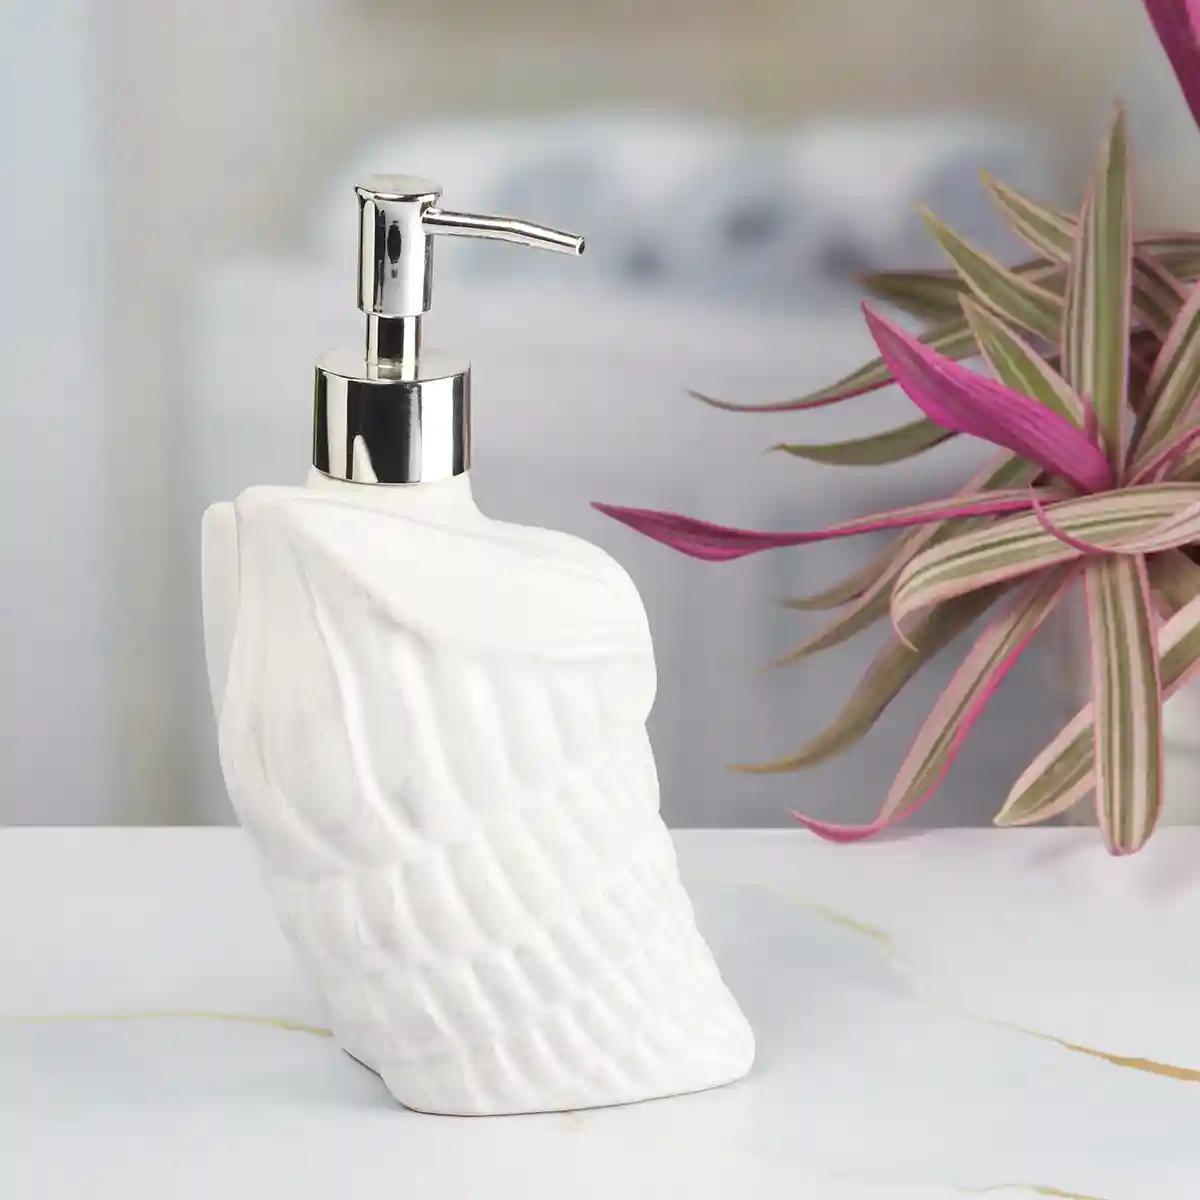 Kookee Ceramic Soap Dispenser for Bathroom handwash, refillable pump bottle for Kitchen hand wash basin, Set of 2 - White (7965)